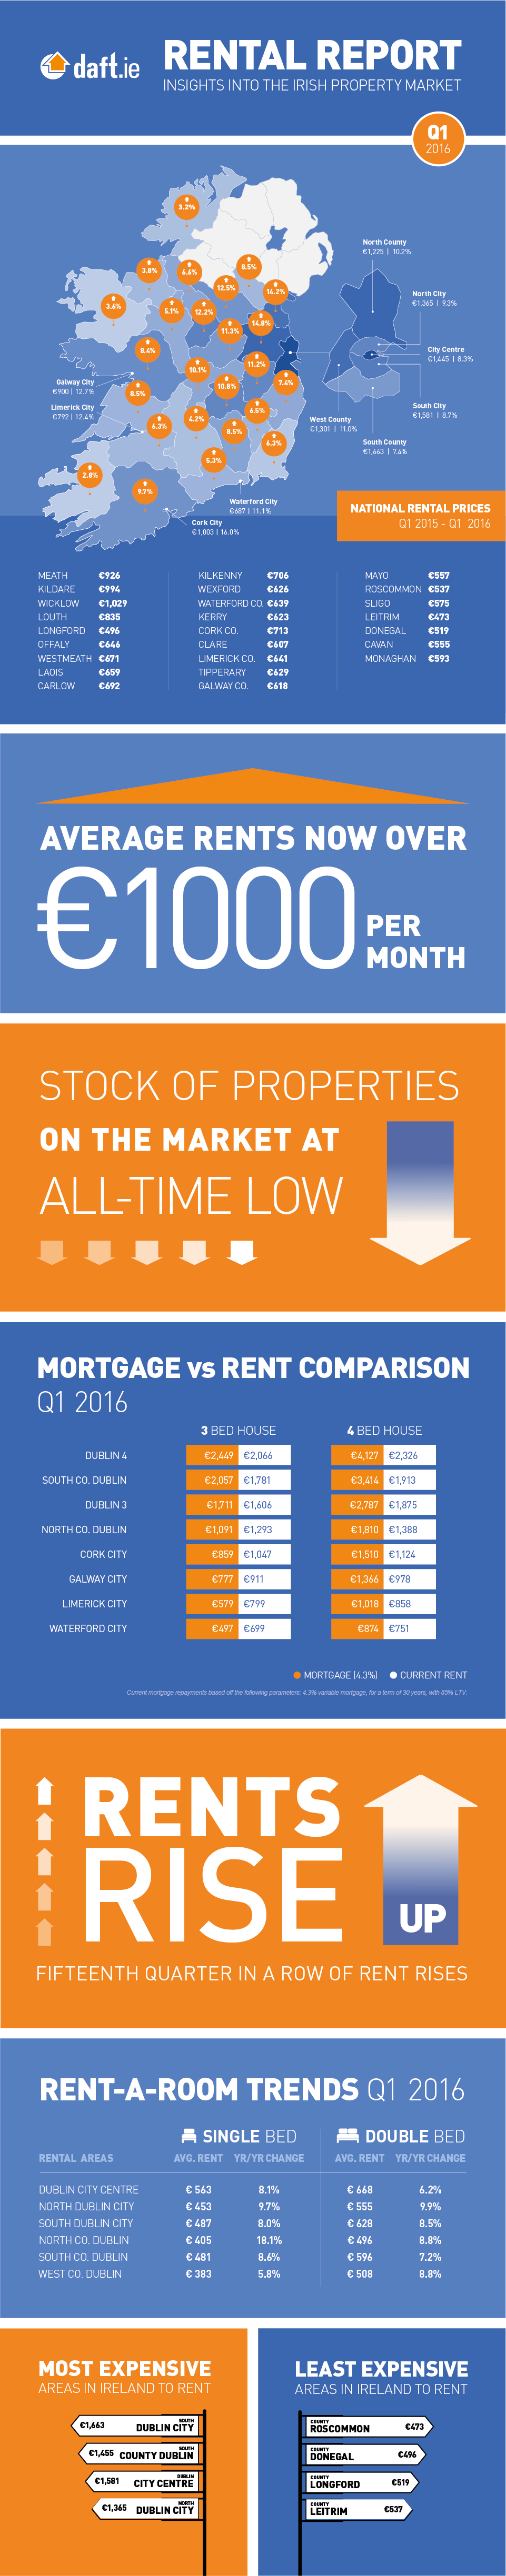 Daft.ie Rental Report: Q1 2016 Infographic